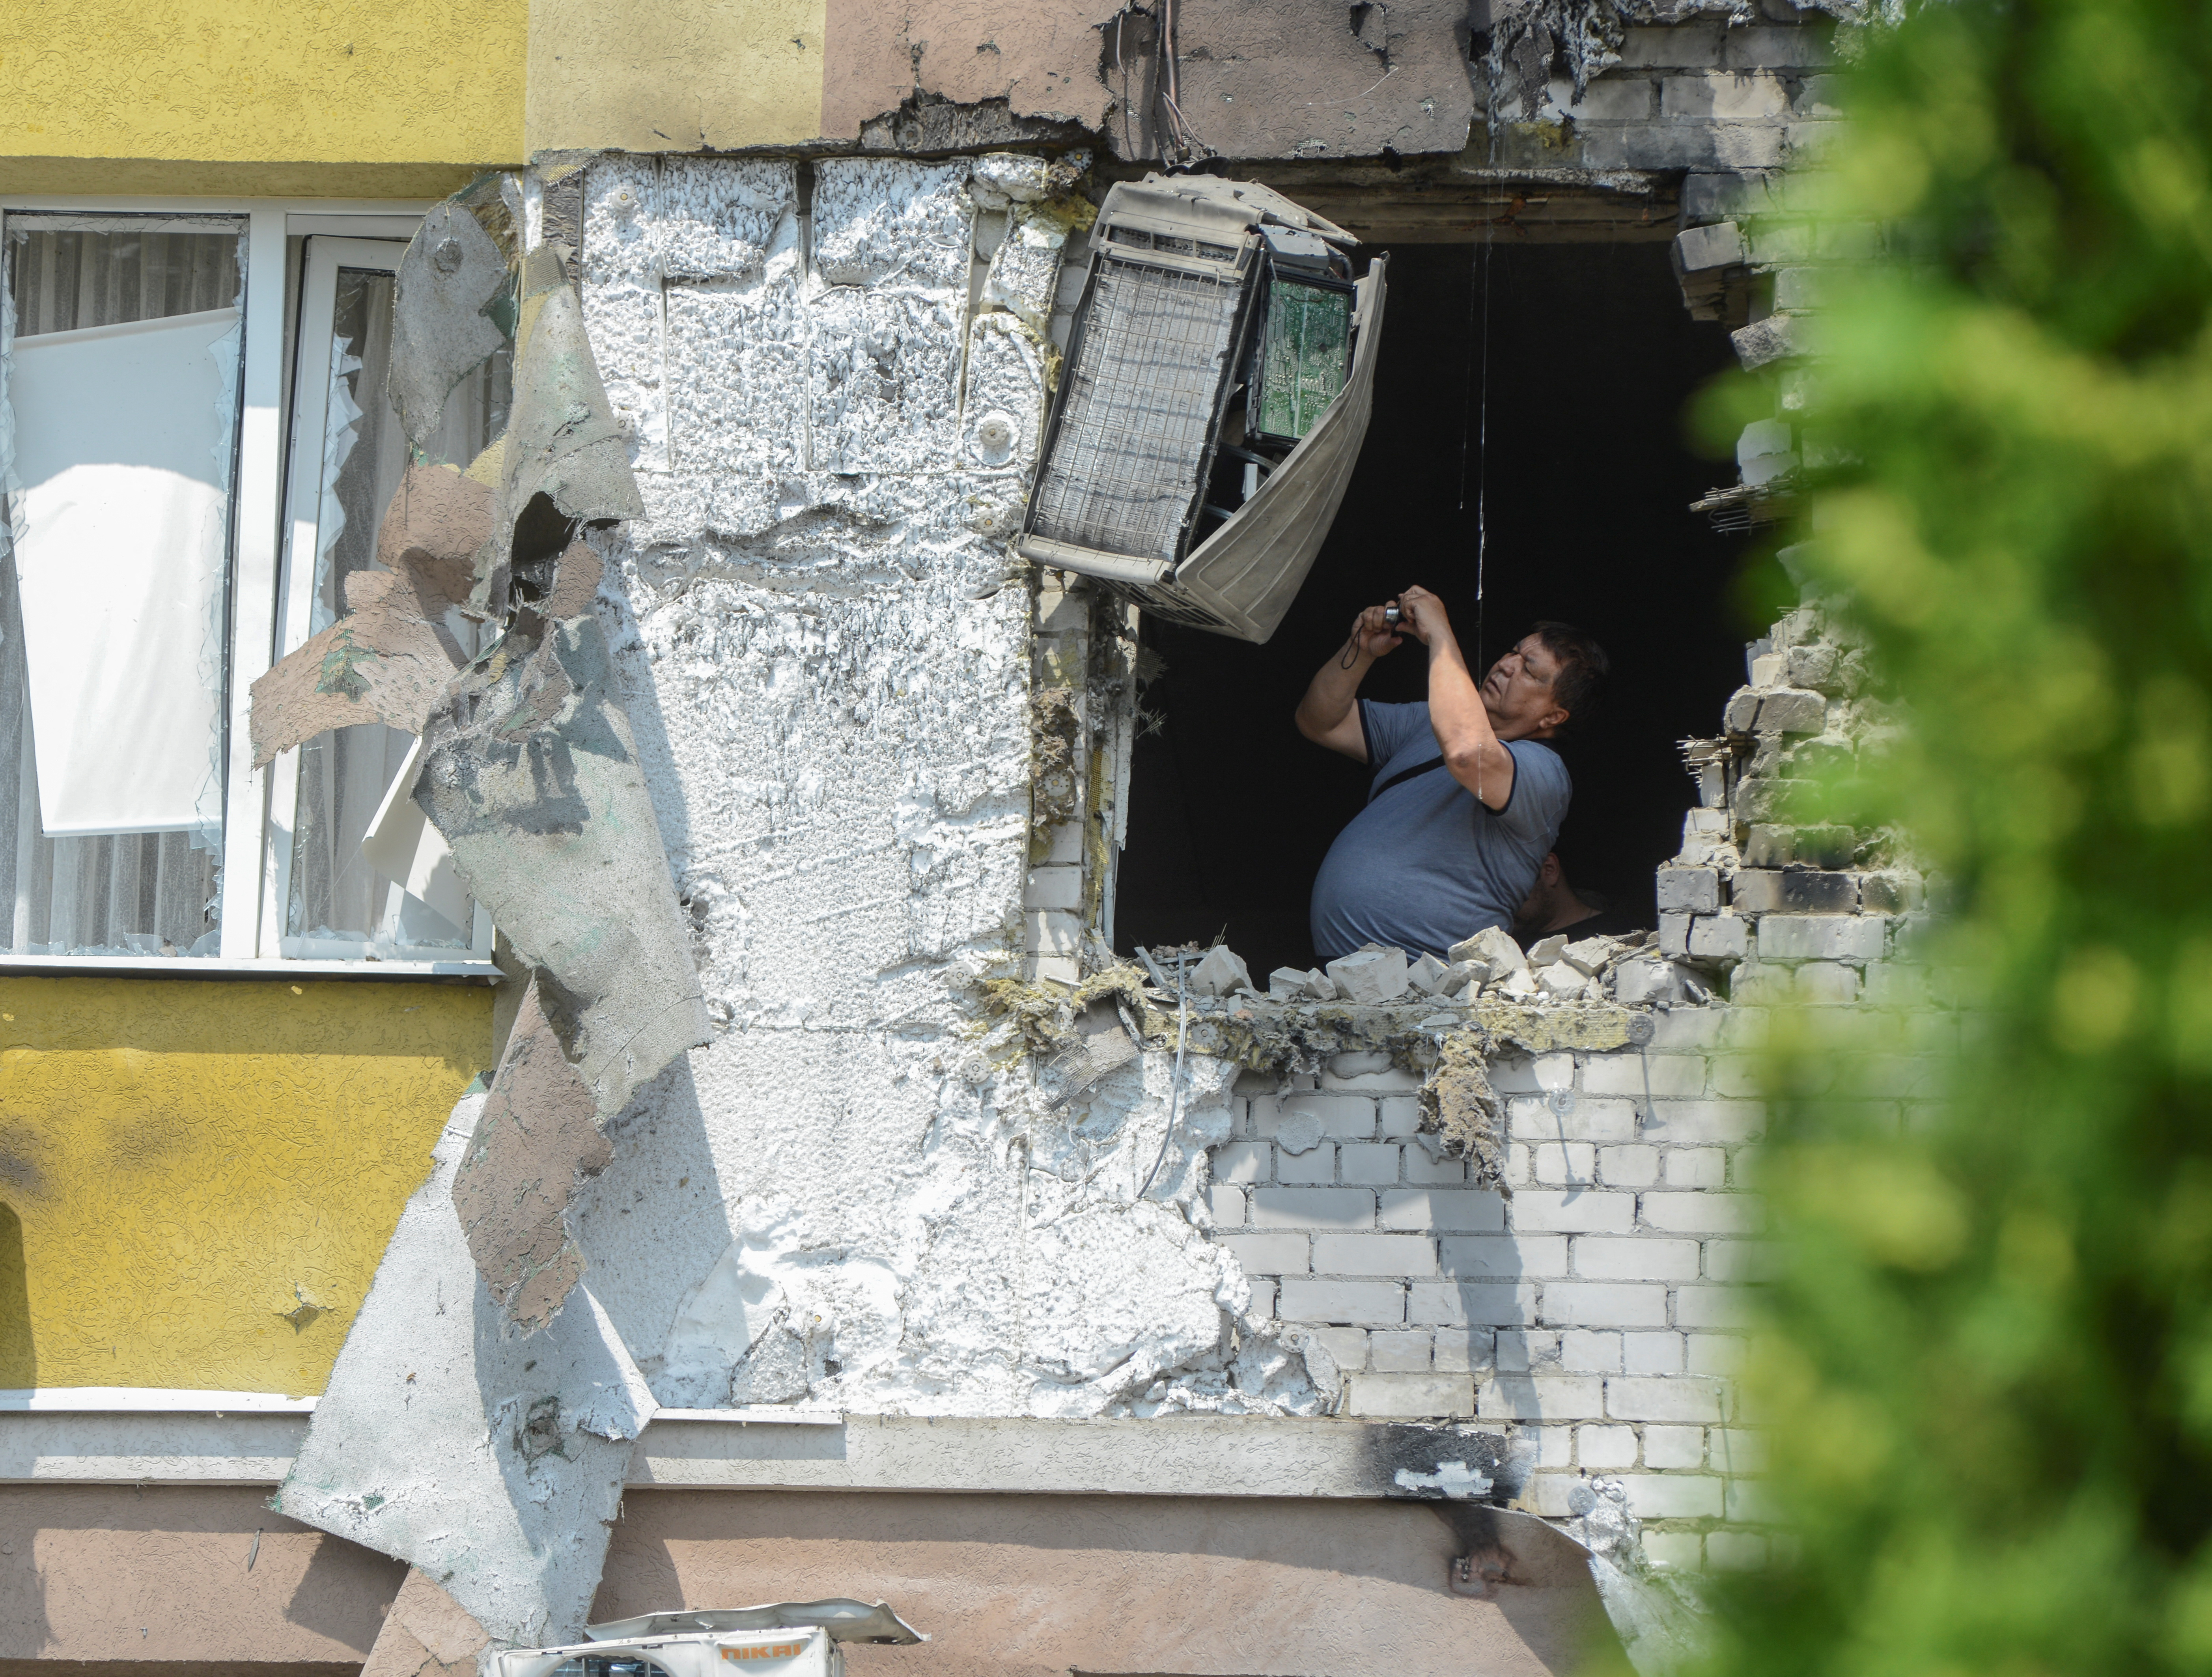 aljazeera.com - Drone crashes into building in Russia's Voronezh city; 3 injured